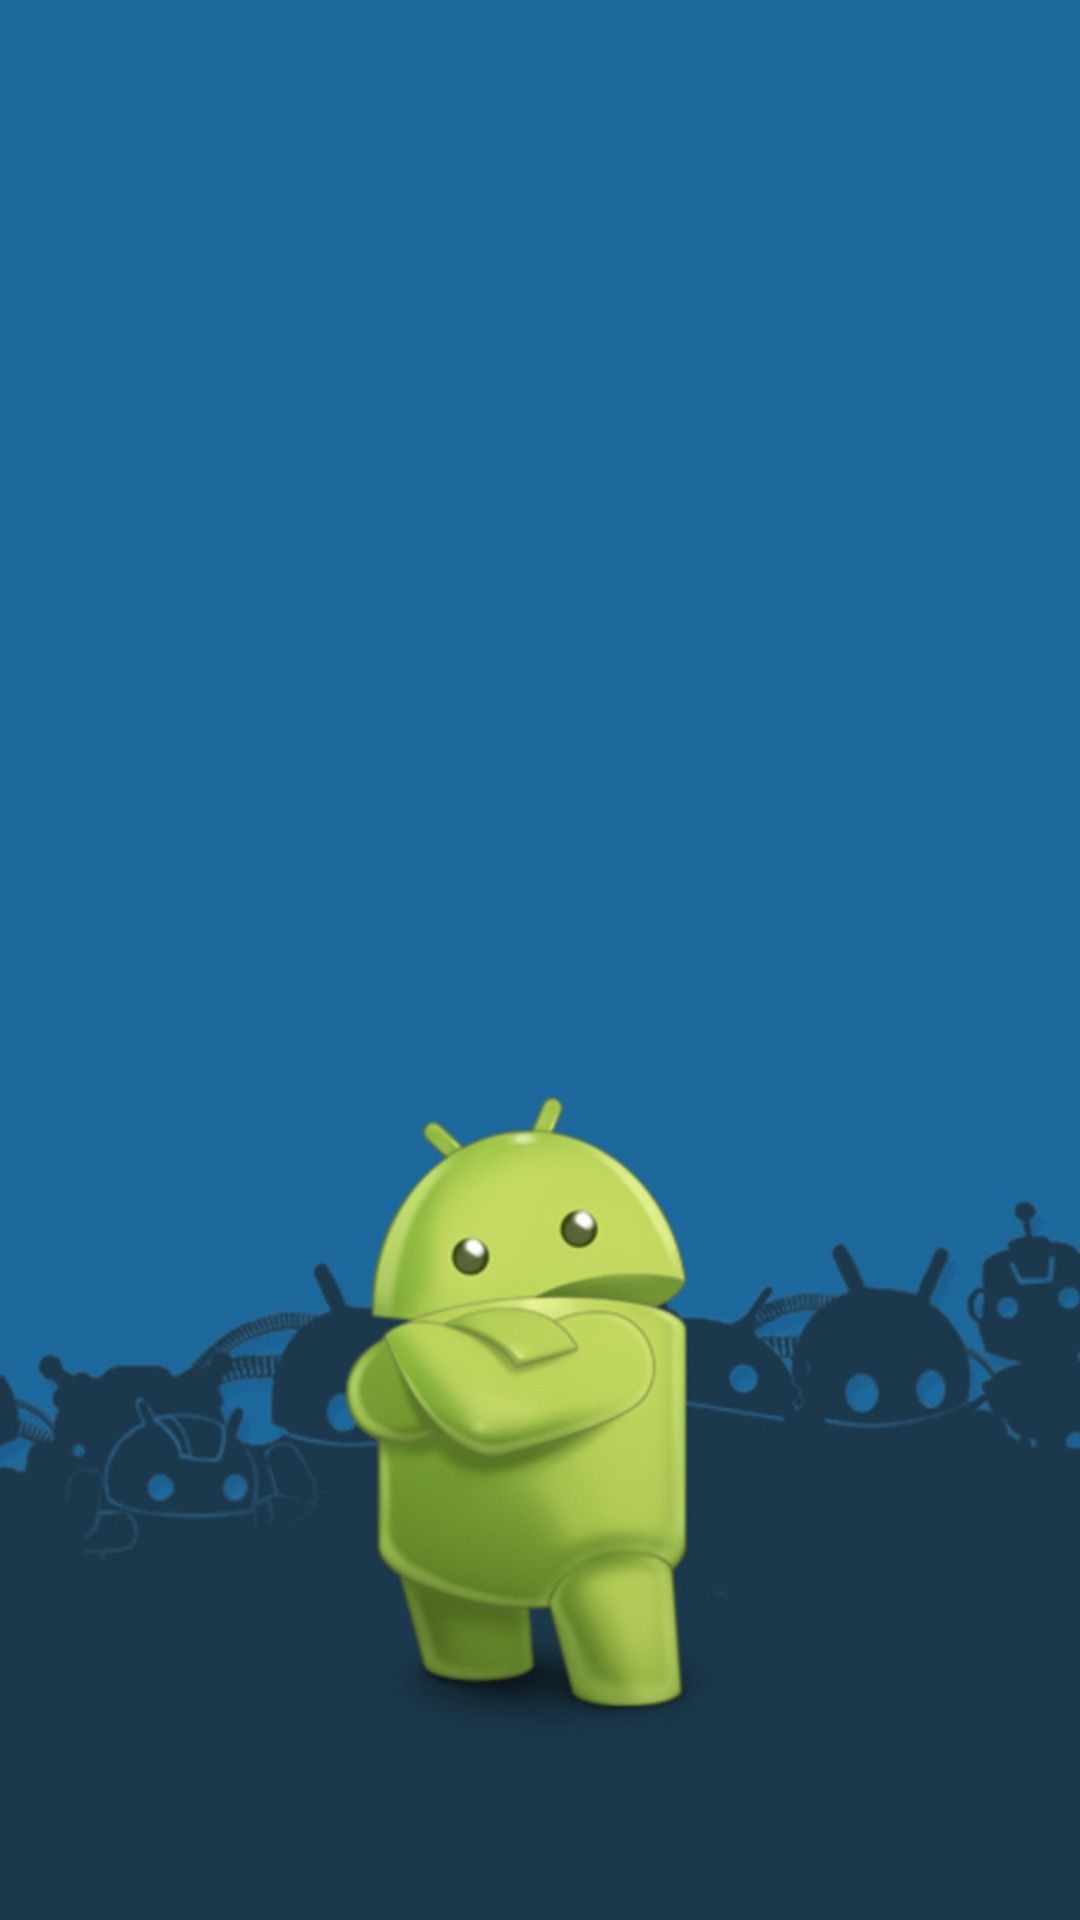 1080x1920 Cool Android Logo Smartphone Wallpaper and Lockscreen HD